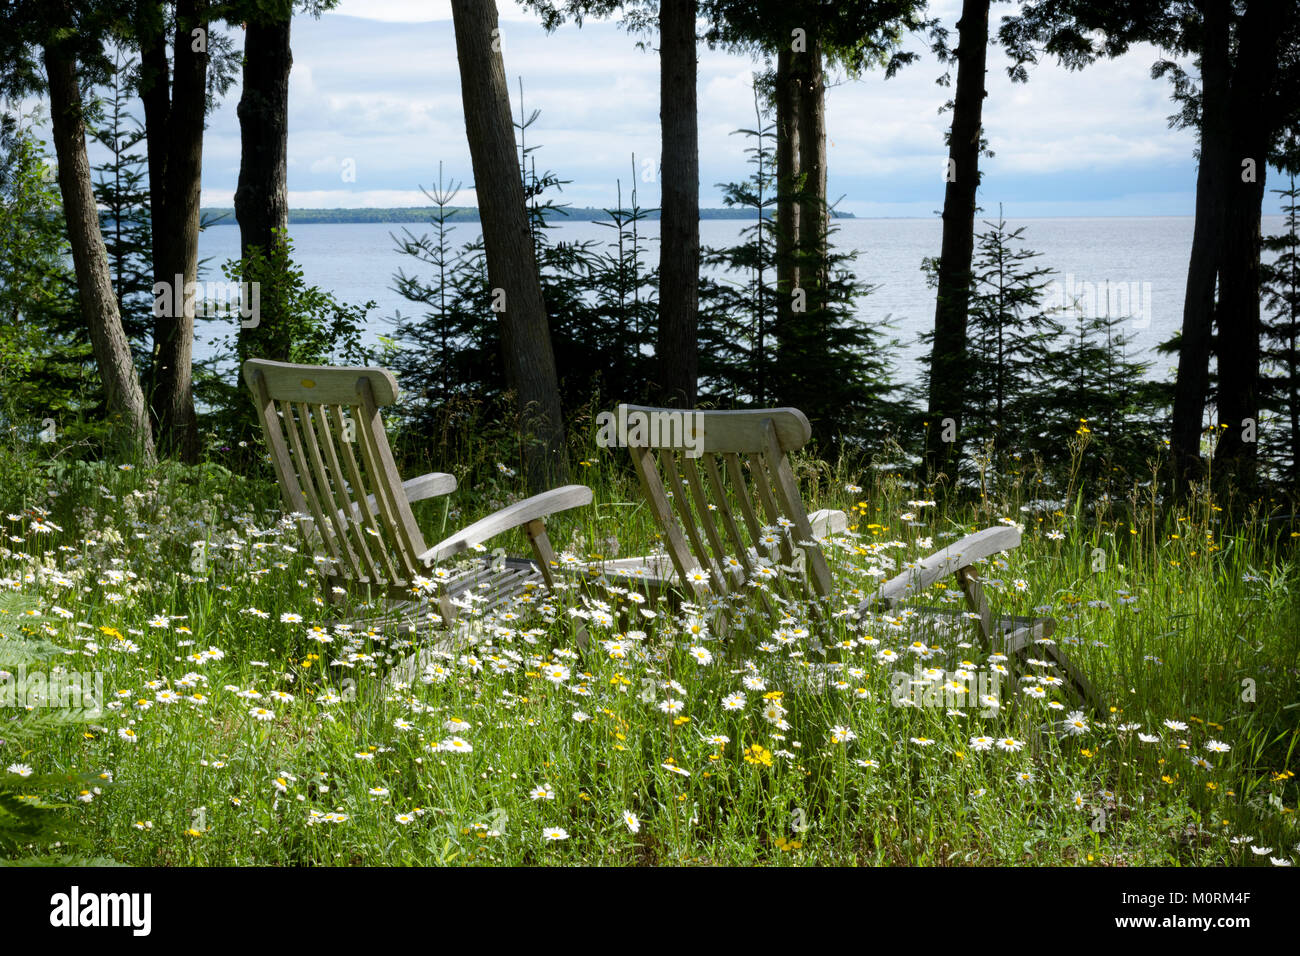 Adirondack Chairs in Meadow Overlooking Lake Michigan in Door County Wisconsin Stock Photo